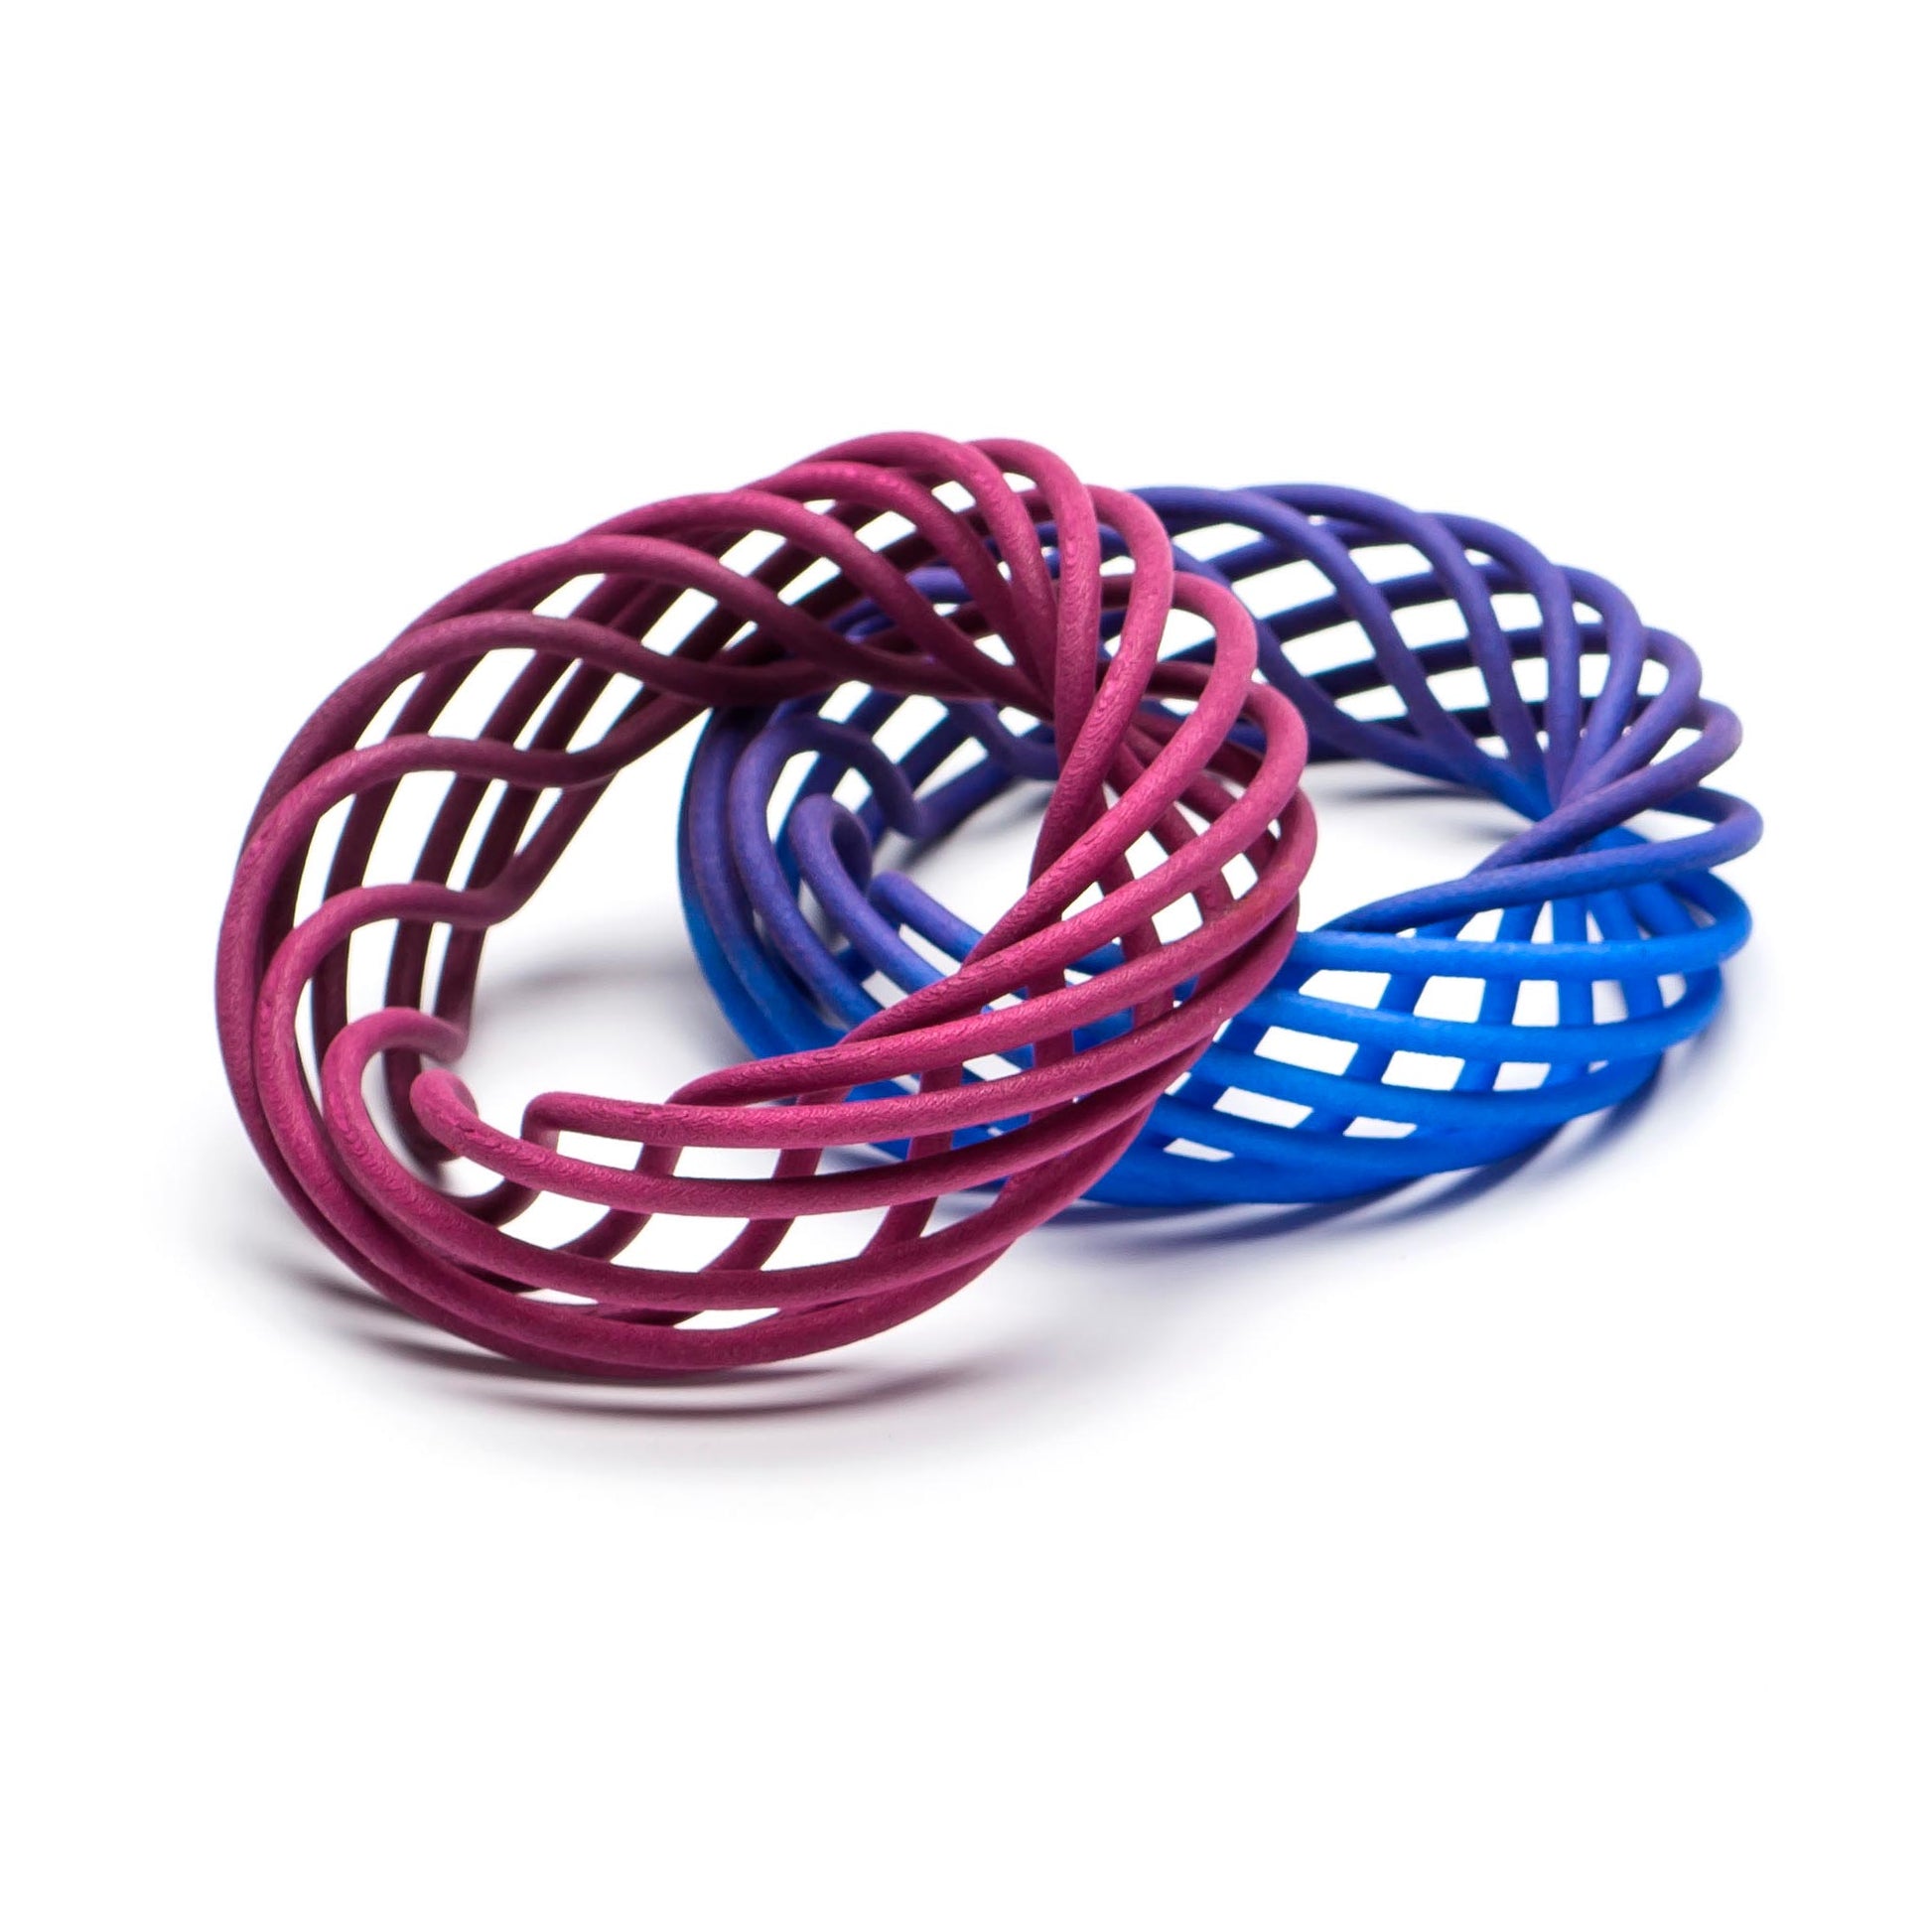 Vortex 3D printed nylon bangles in magenta against blue to purple fade